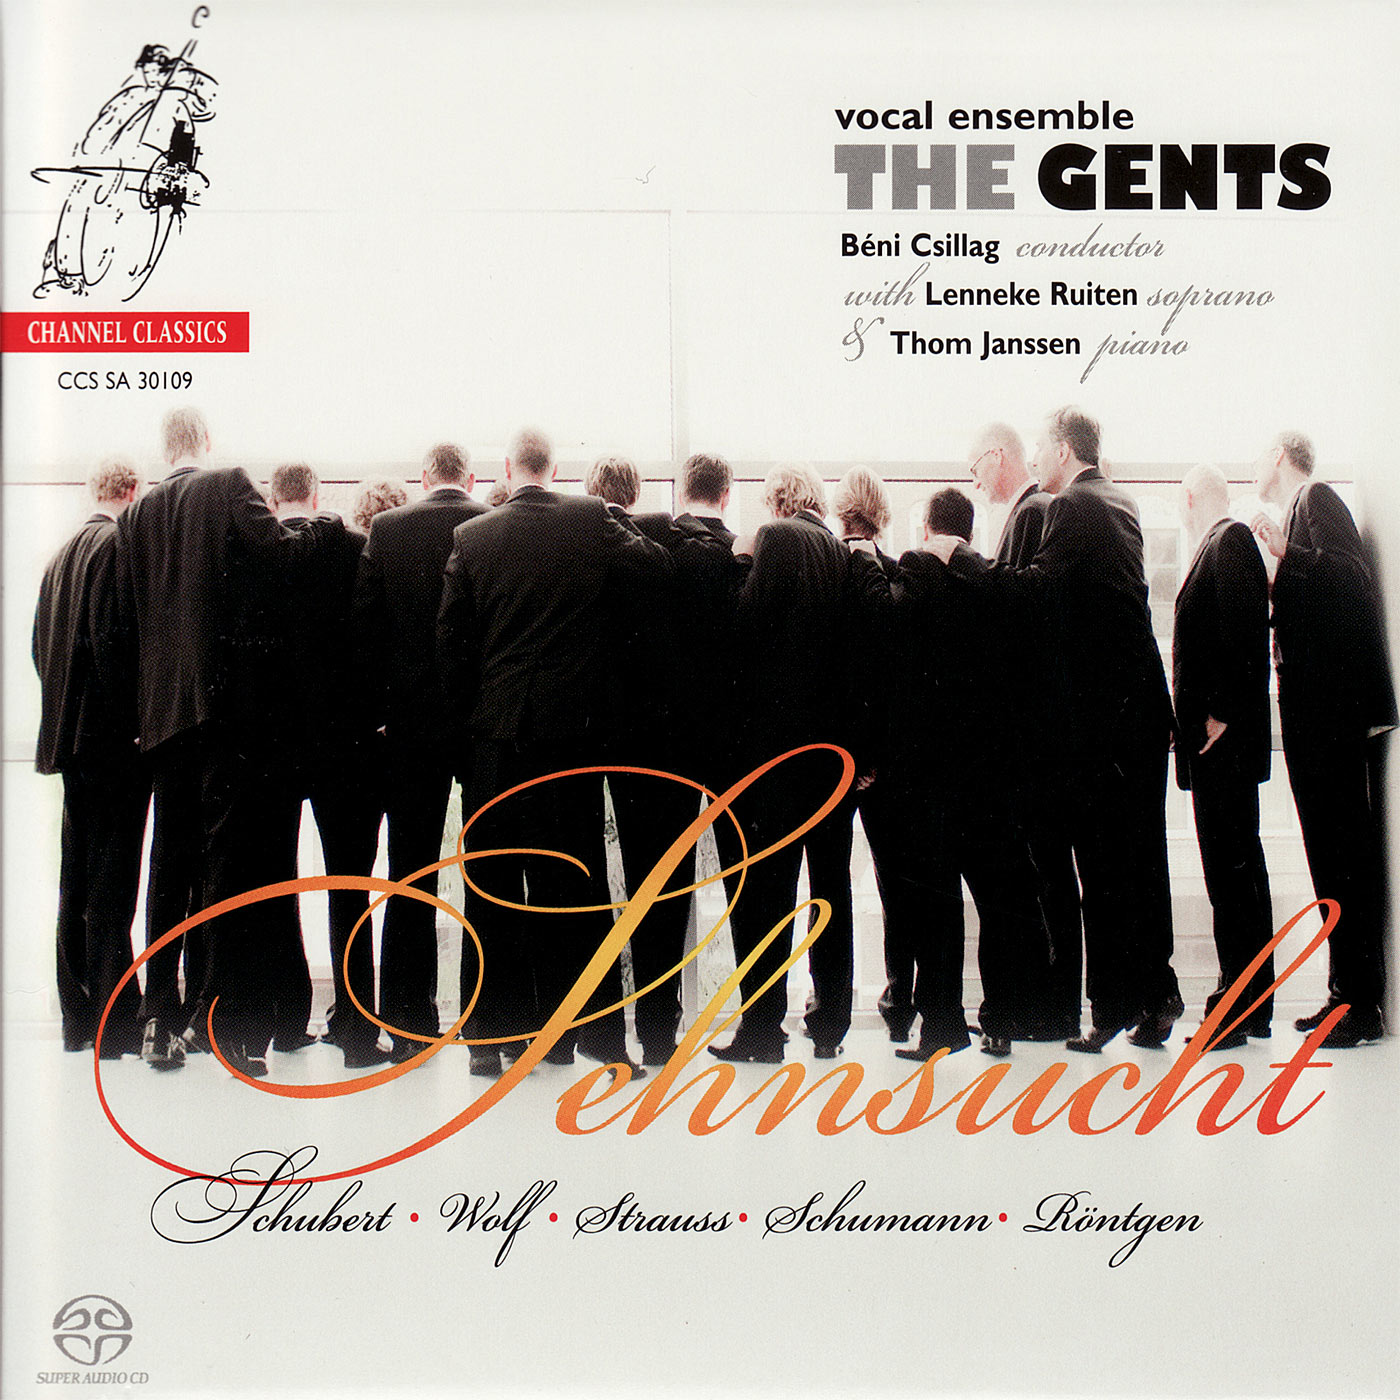 The Gents – Sensucht